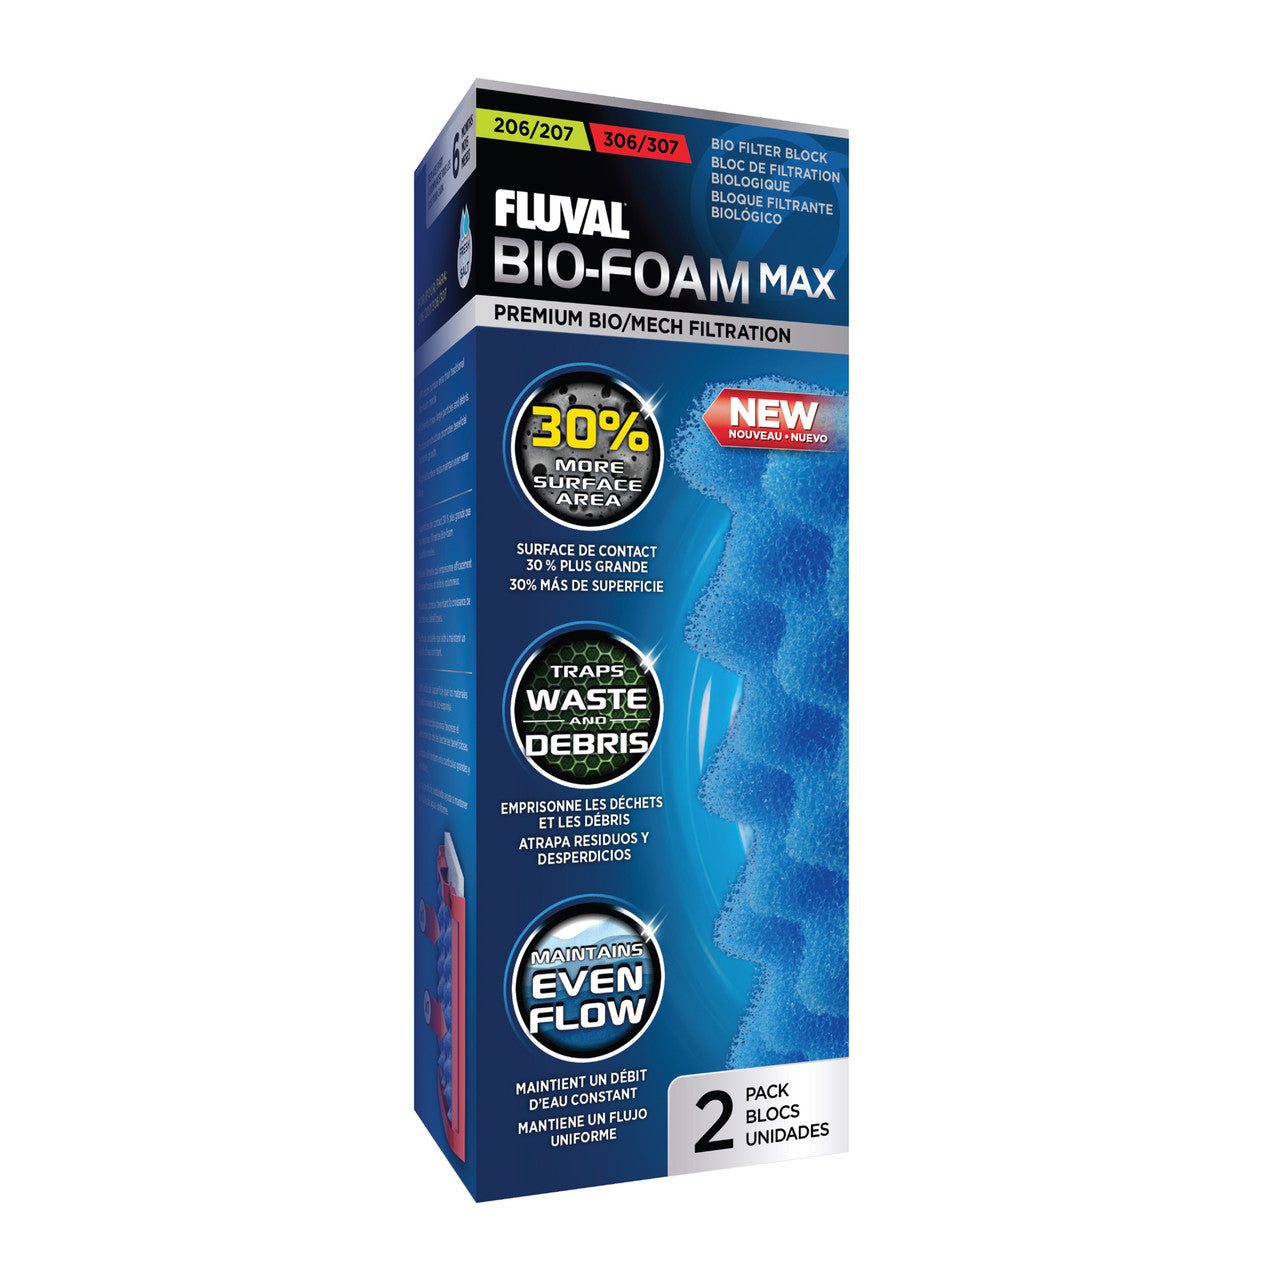 Fluval 207-307 Blue BioFoam MAX, 2 pcs 015561101882